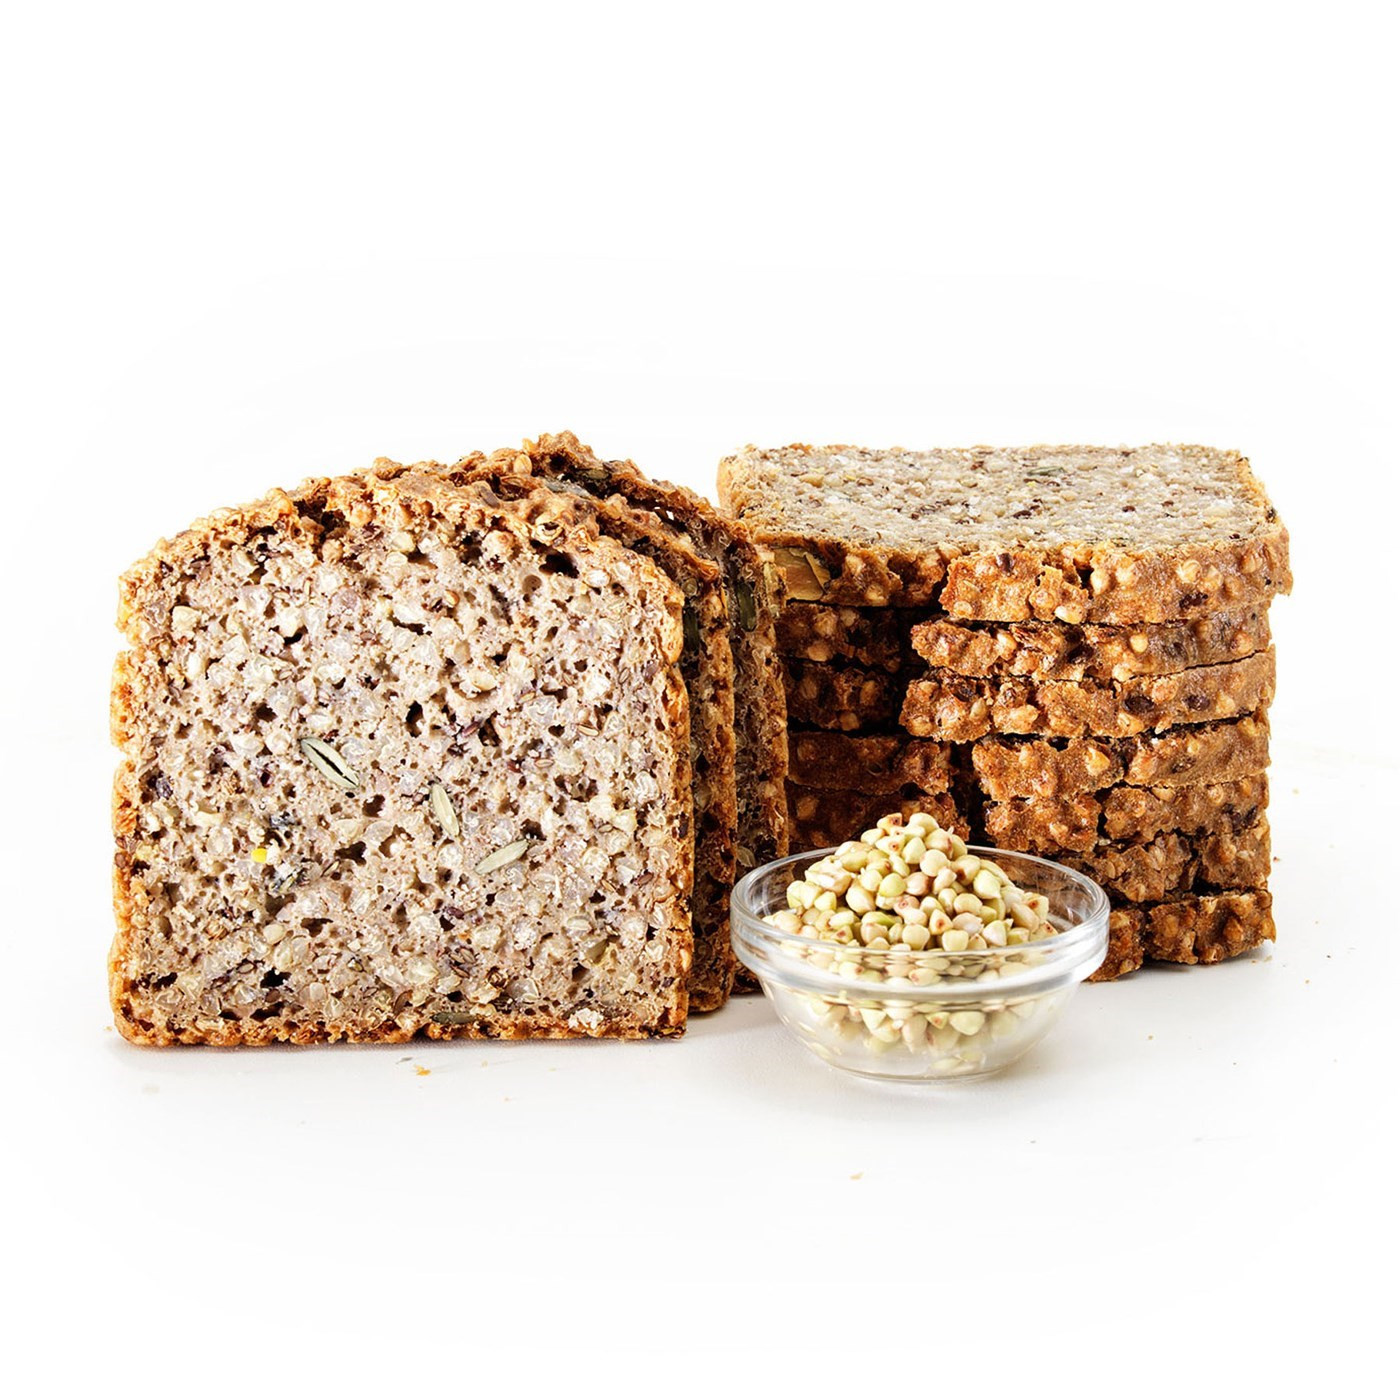 15 Recipes for Great organic Gluten Free Bread